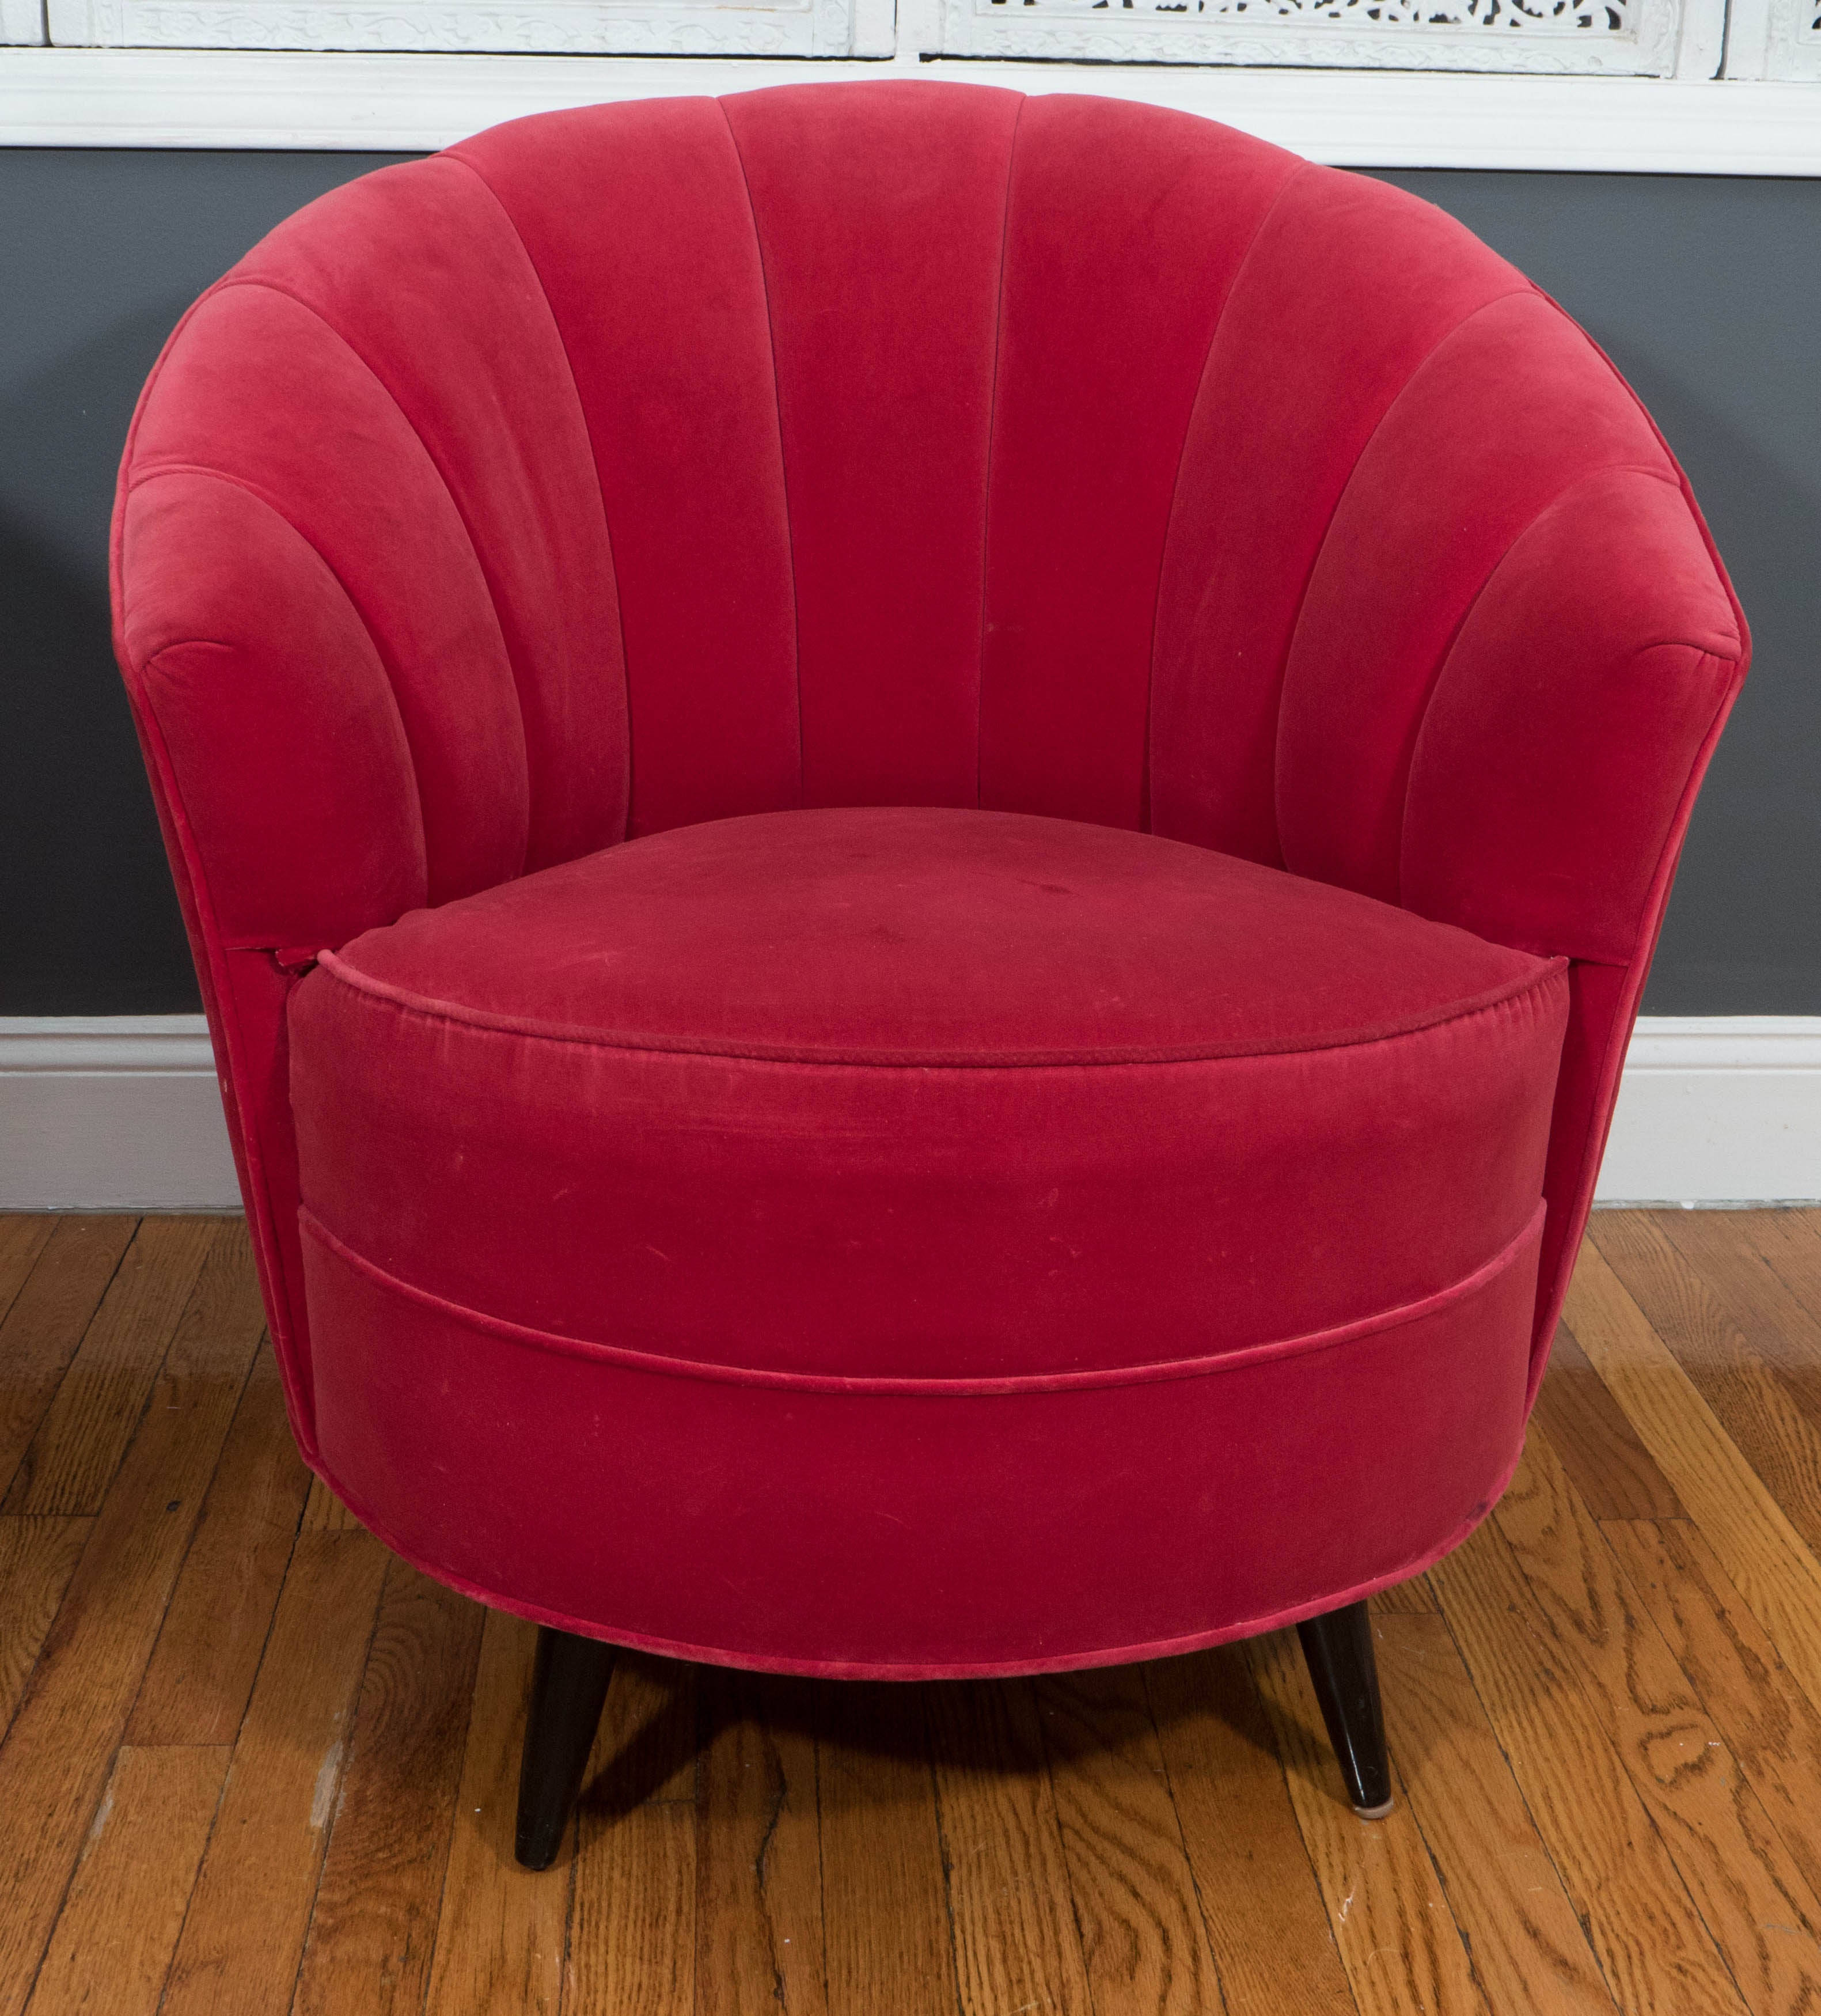 Pair of 1960s red velvet channel back swivel chairs.